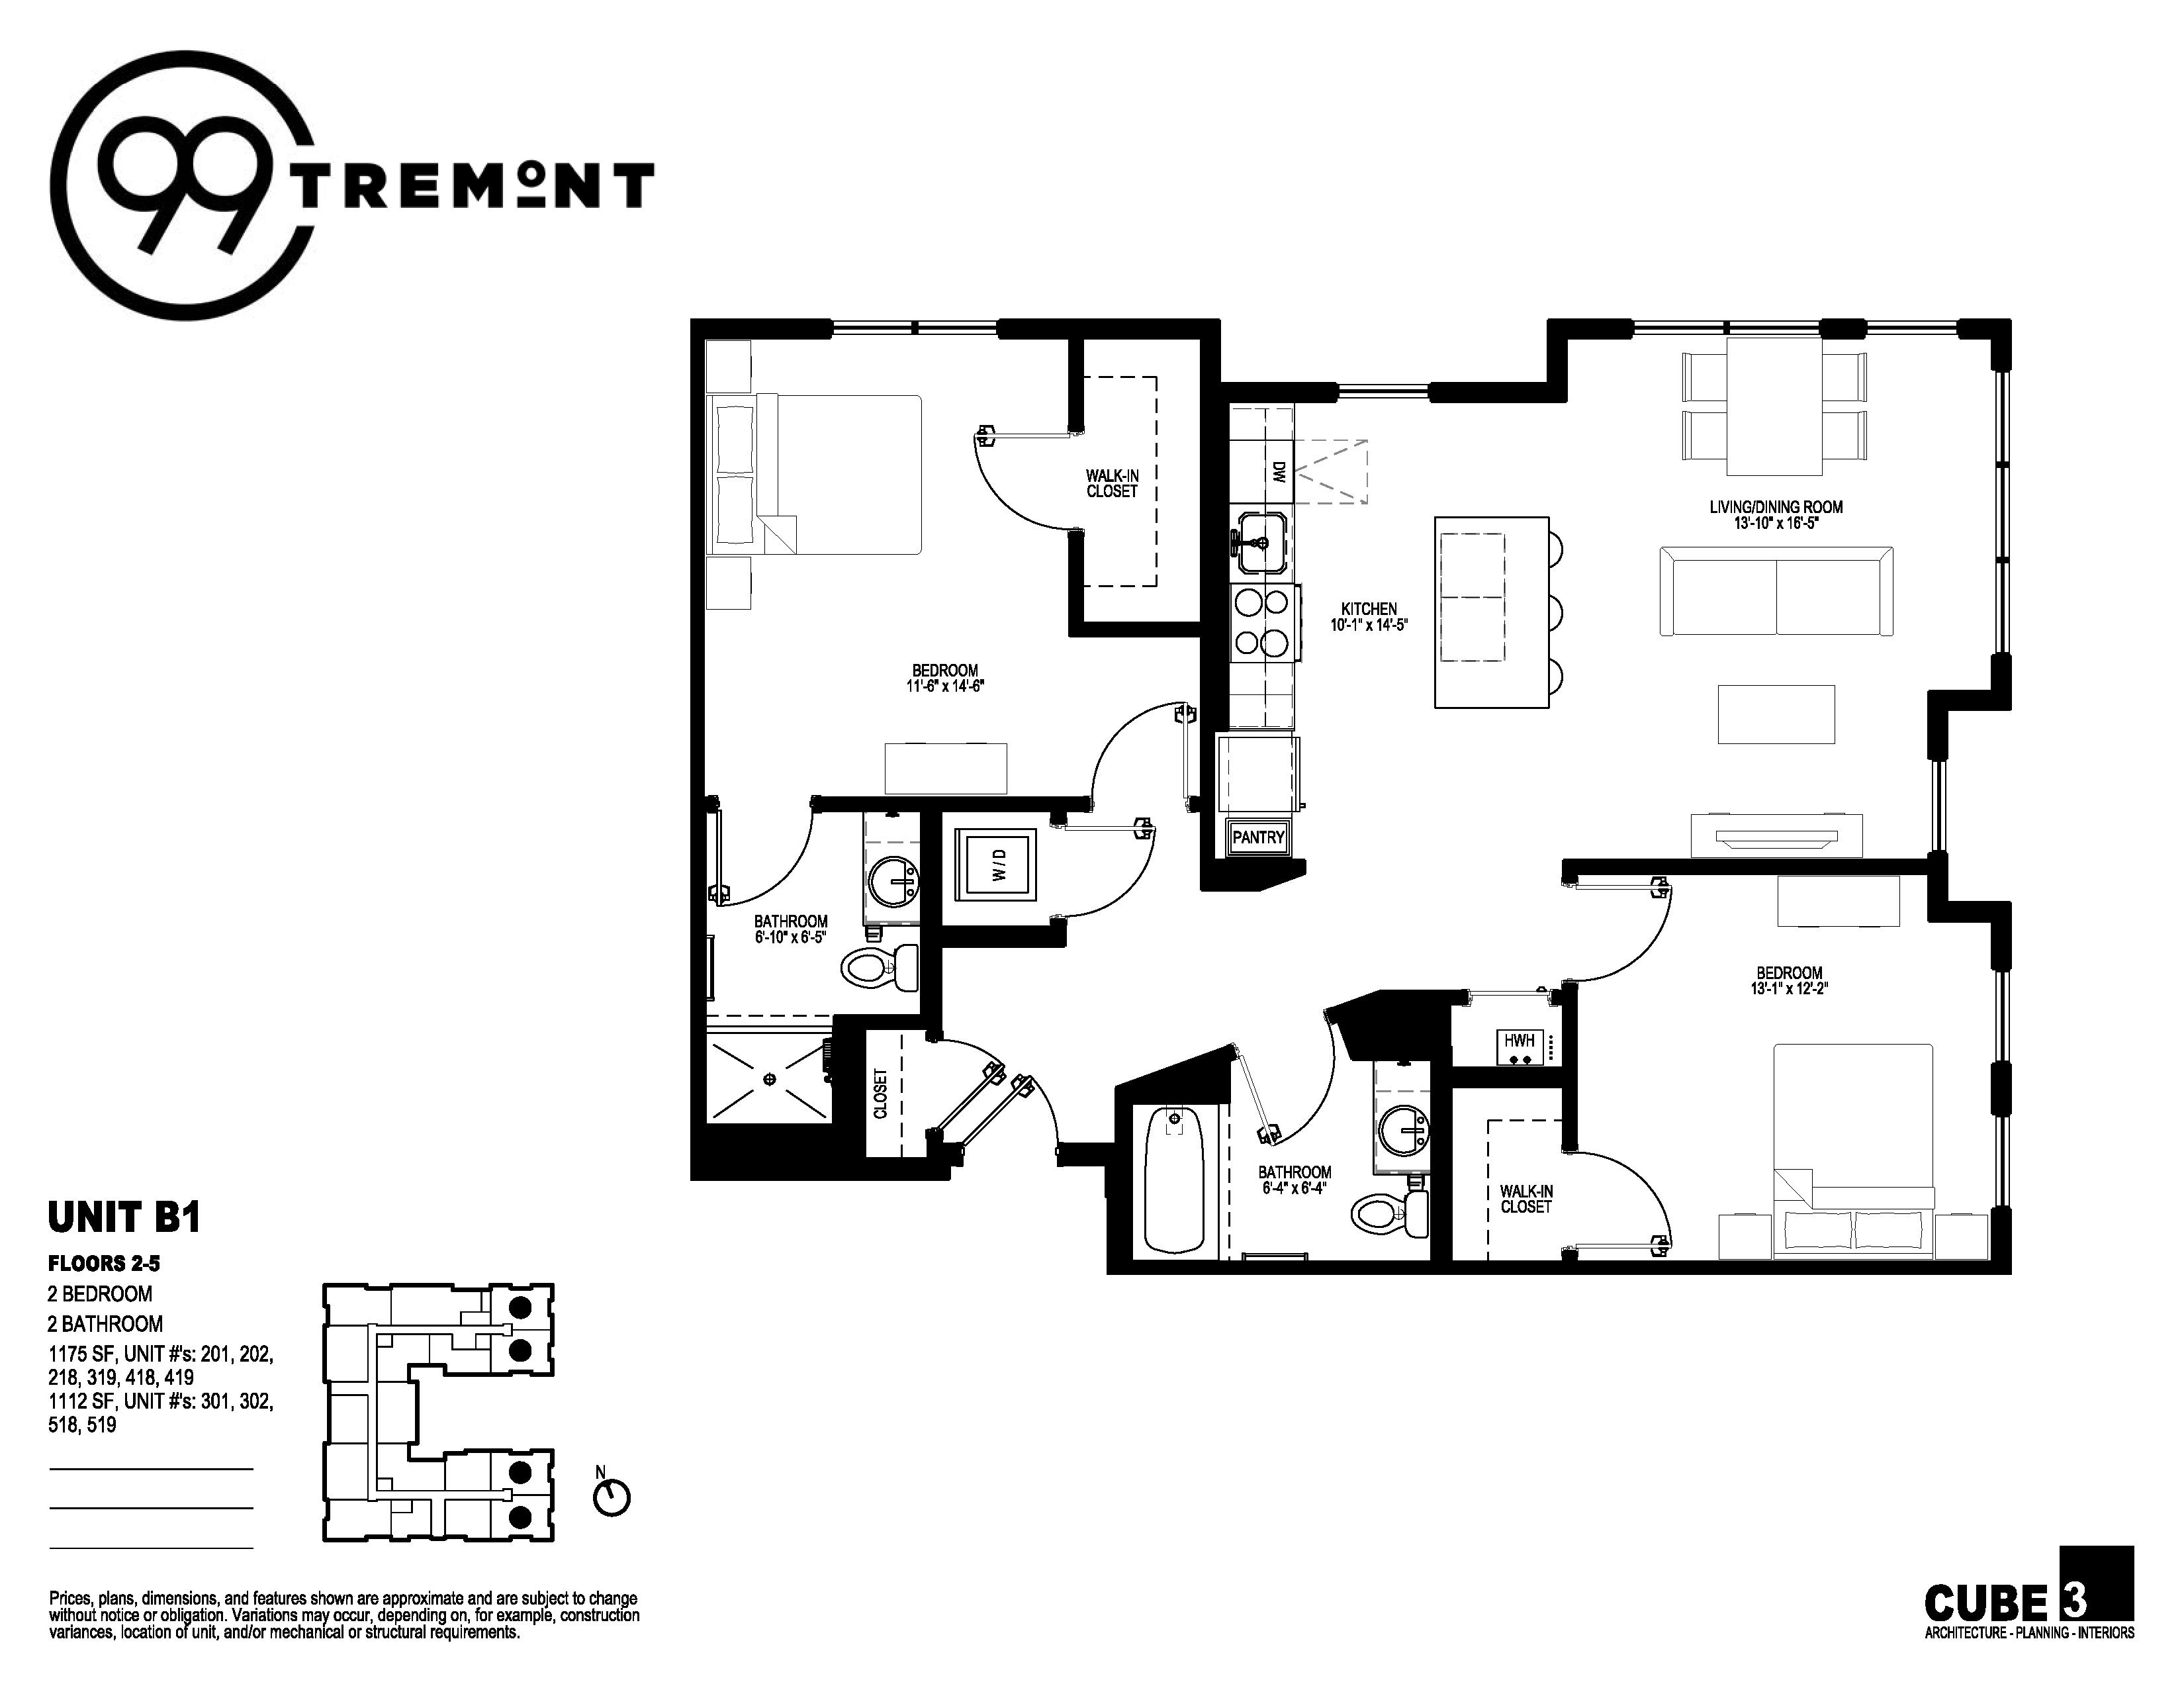 99 Tremont Residences Floor plan